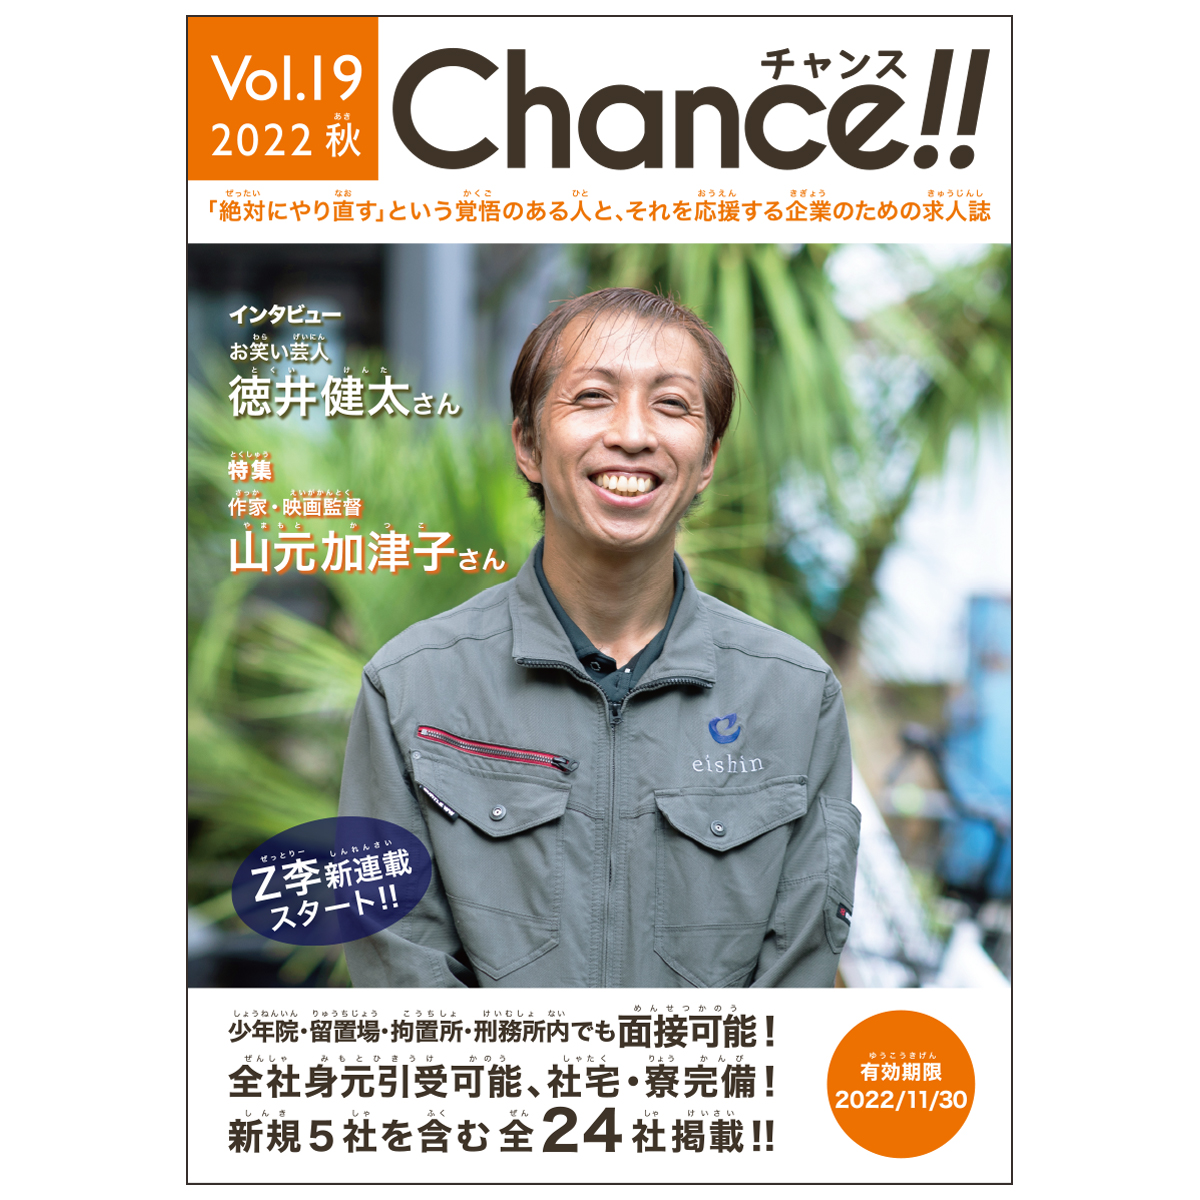 Chance!! Vol.19